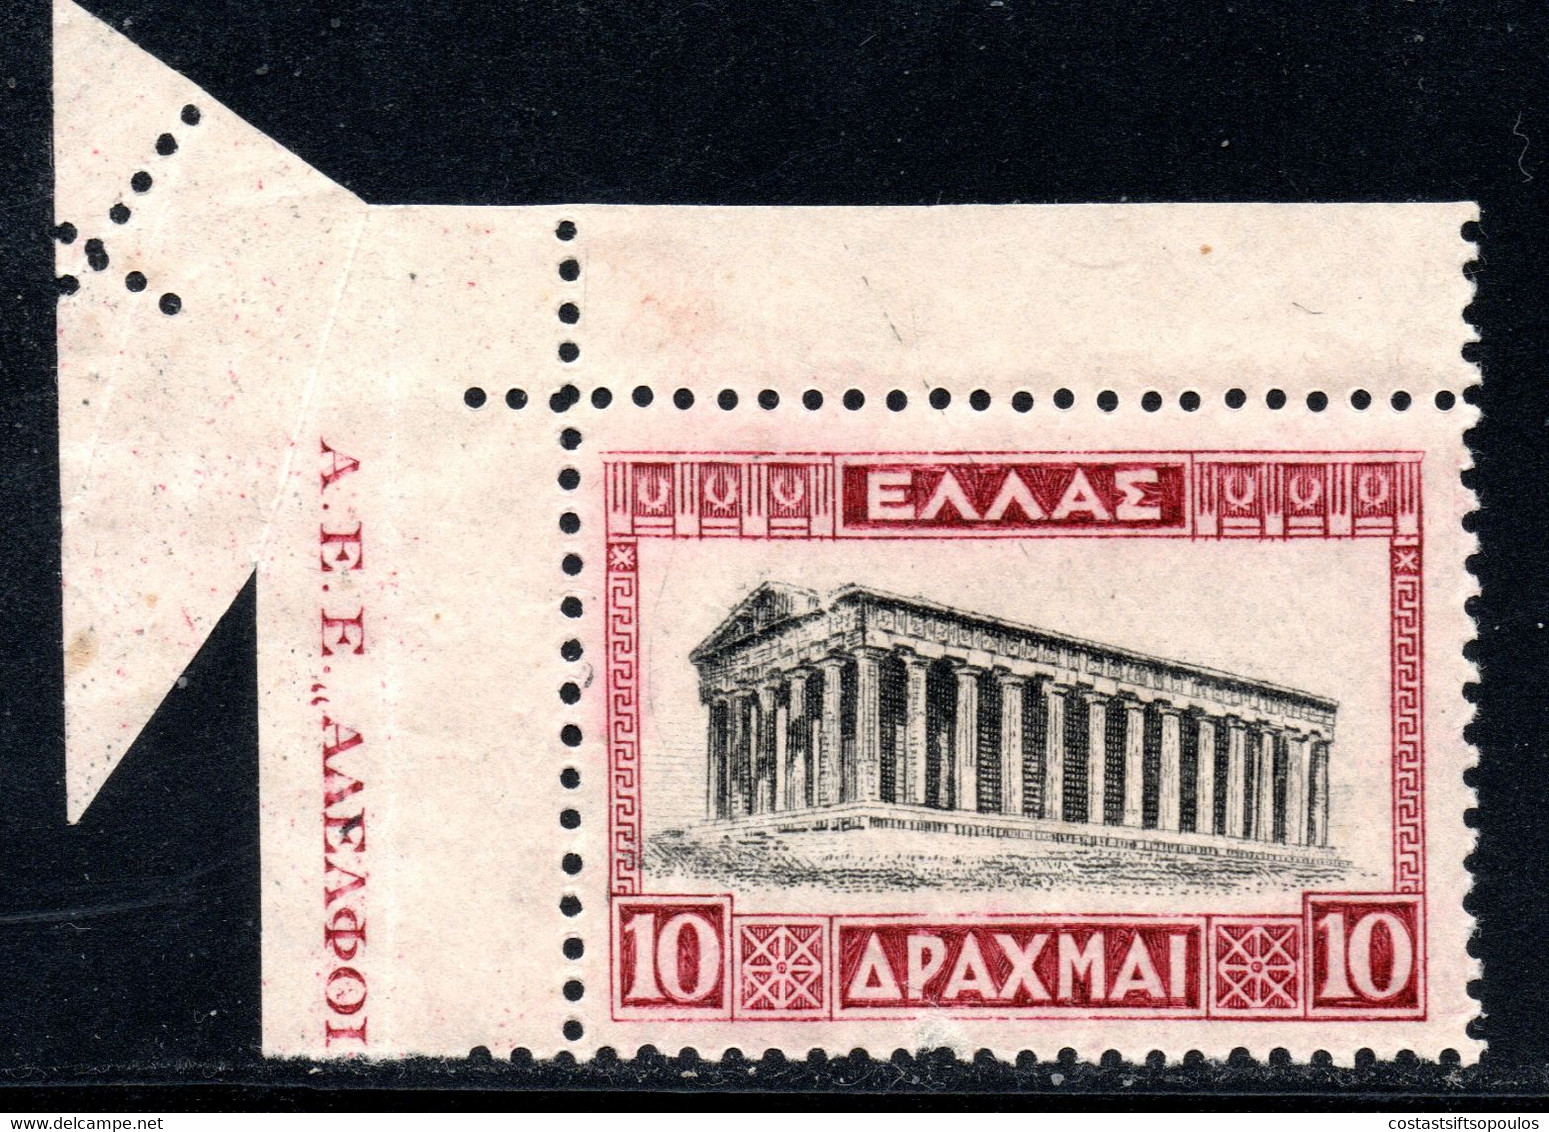 1191.GREECE,1927 10 DR. THESSEUS TEMPLE,SC. 332 NICE VARIETY MNH,LIGHT GUM BLEMISHES - Abarten Und Kuriositäten